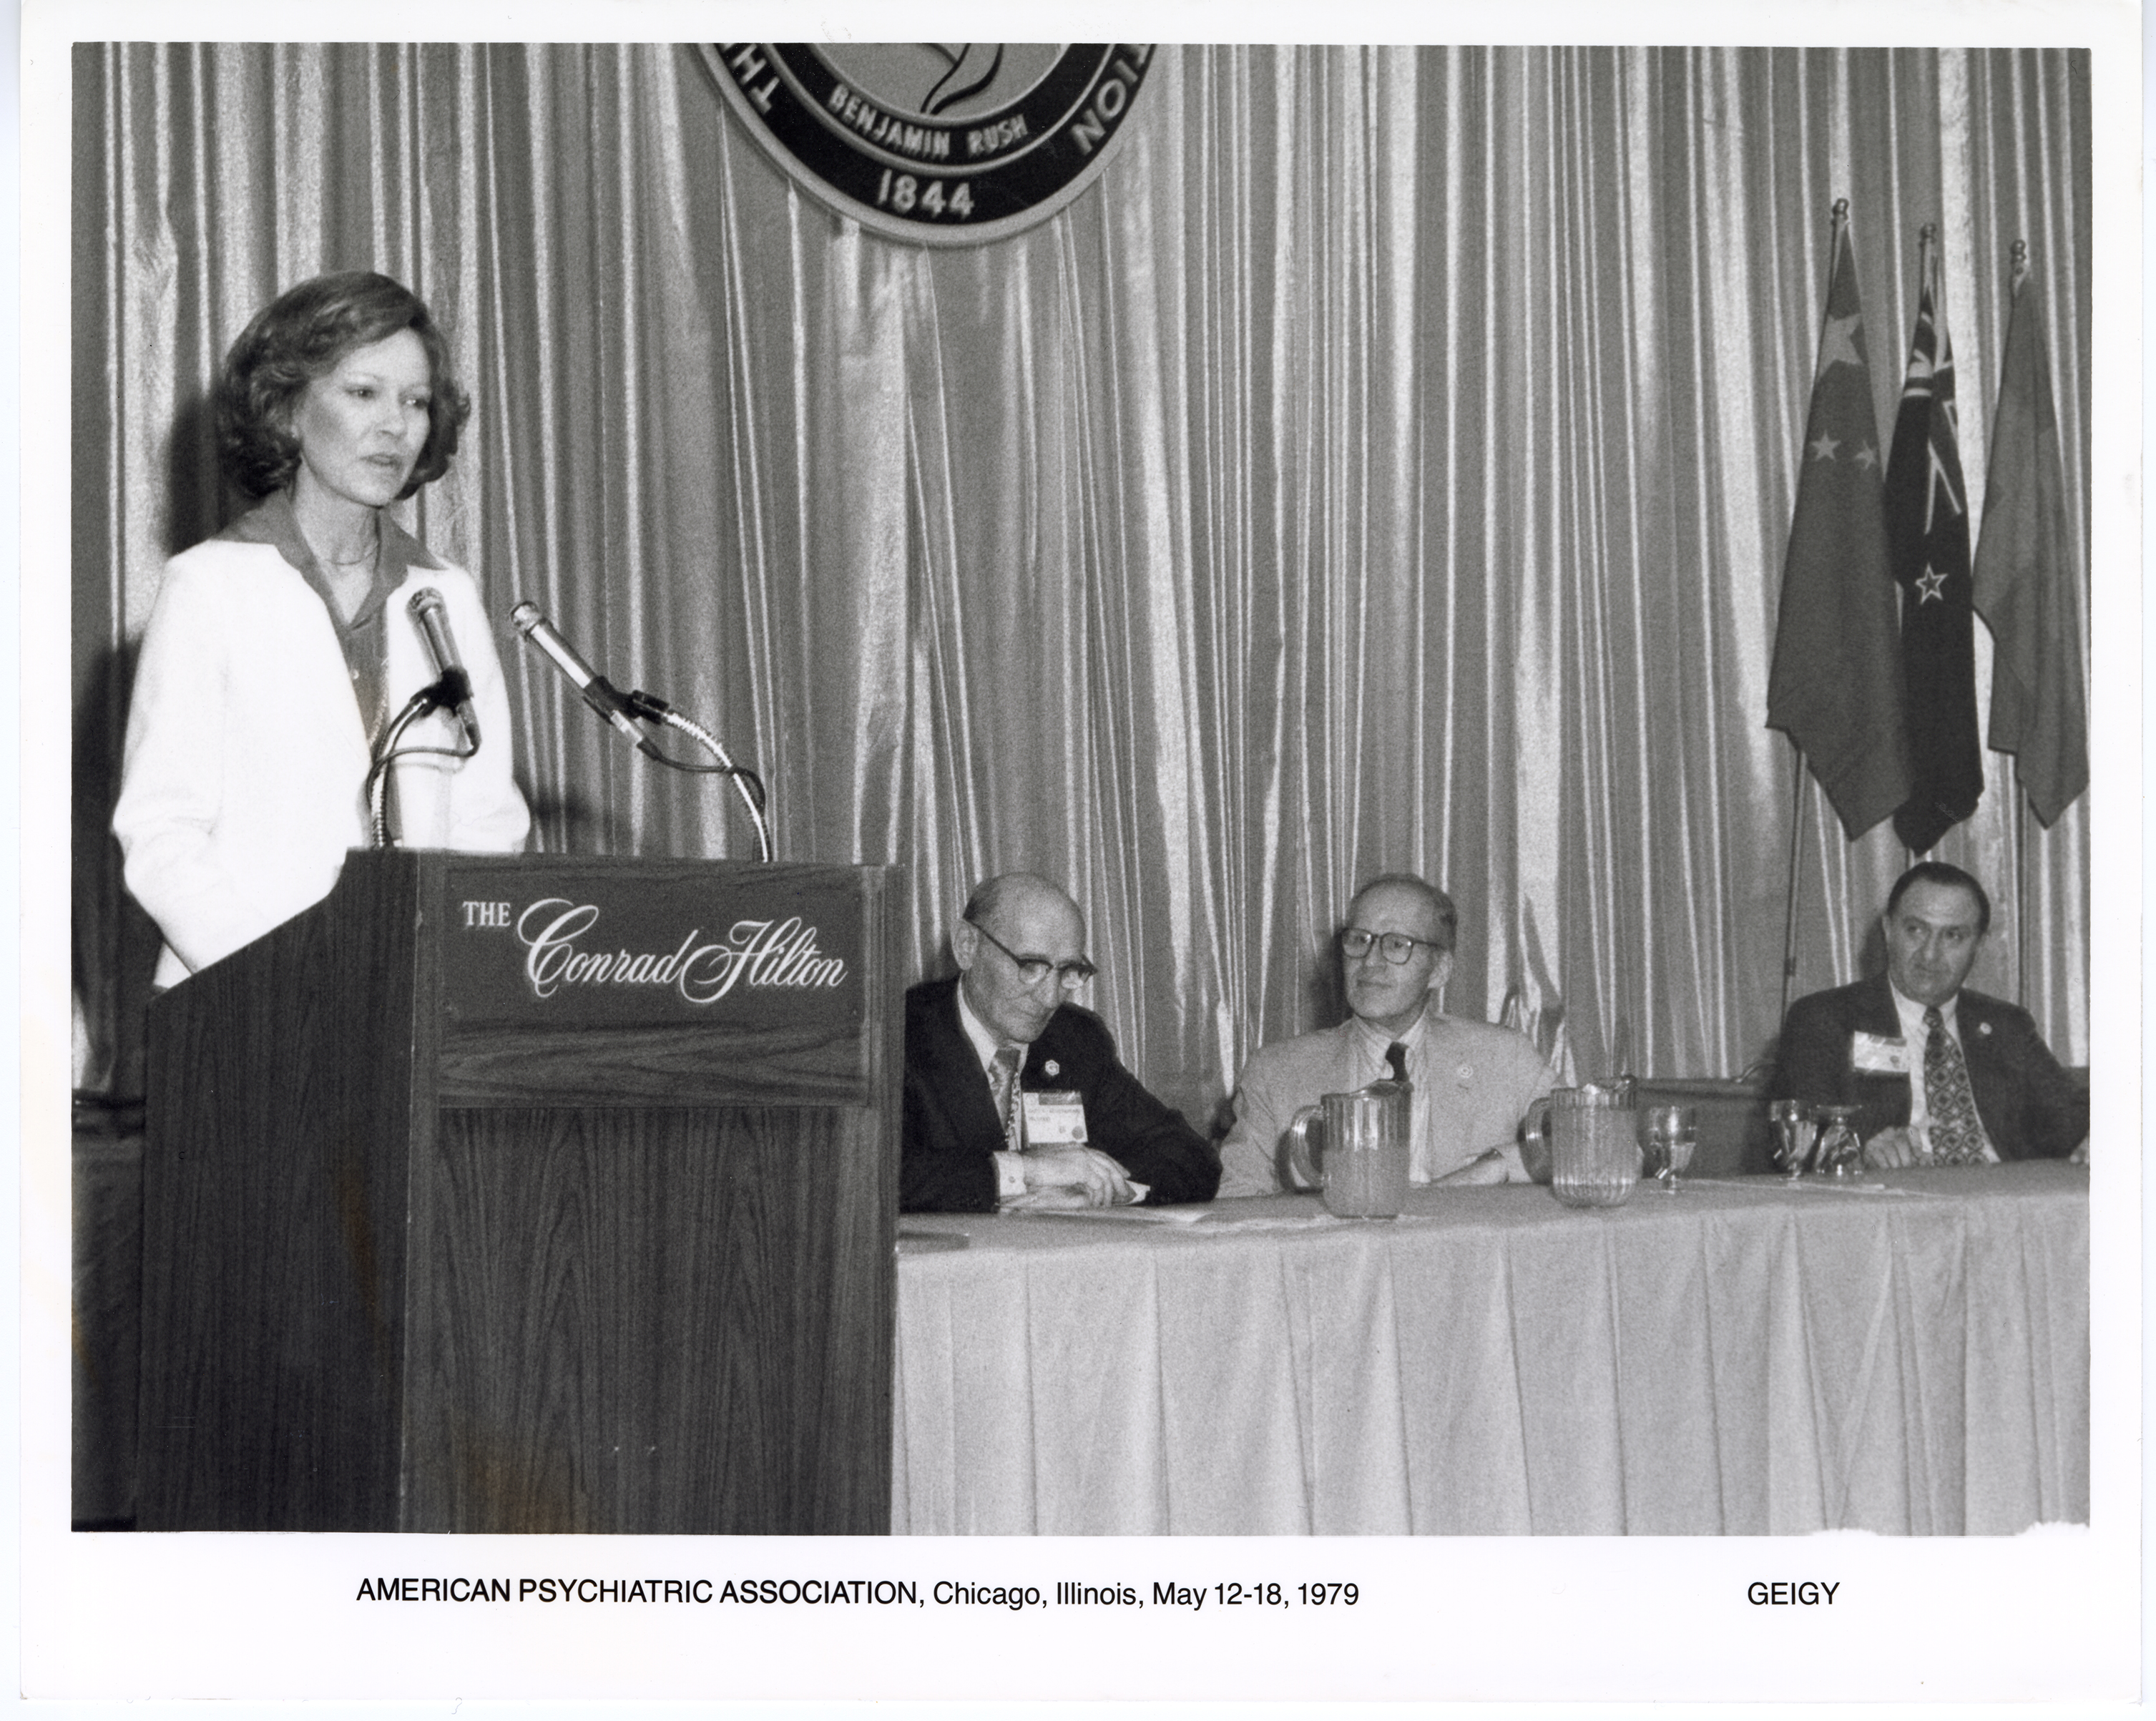 Rosalyn Carter at a podium; American Psychiatric Association 1979